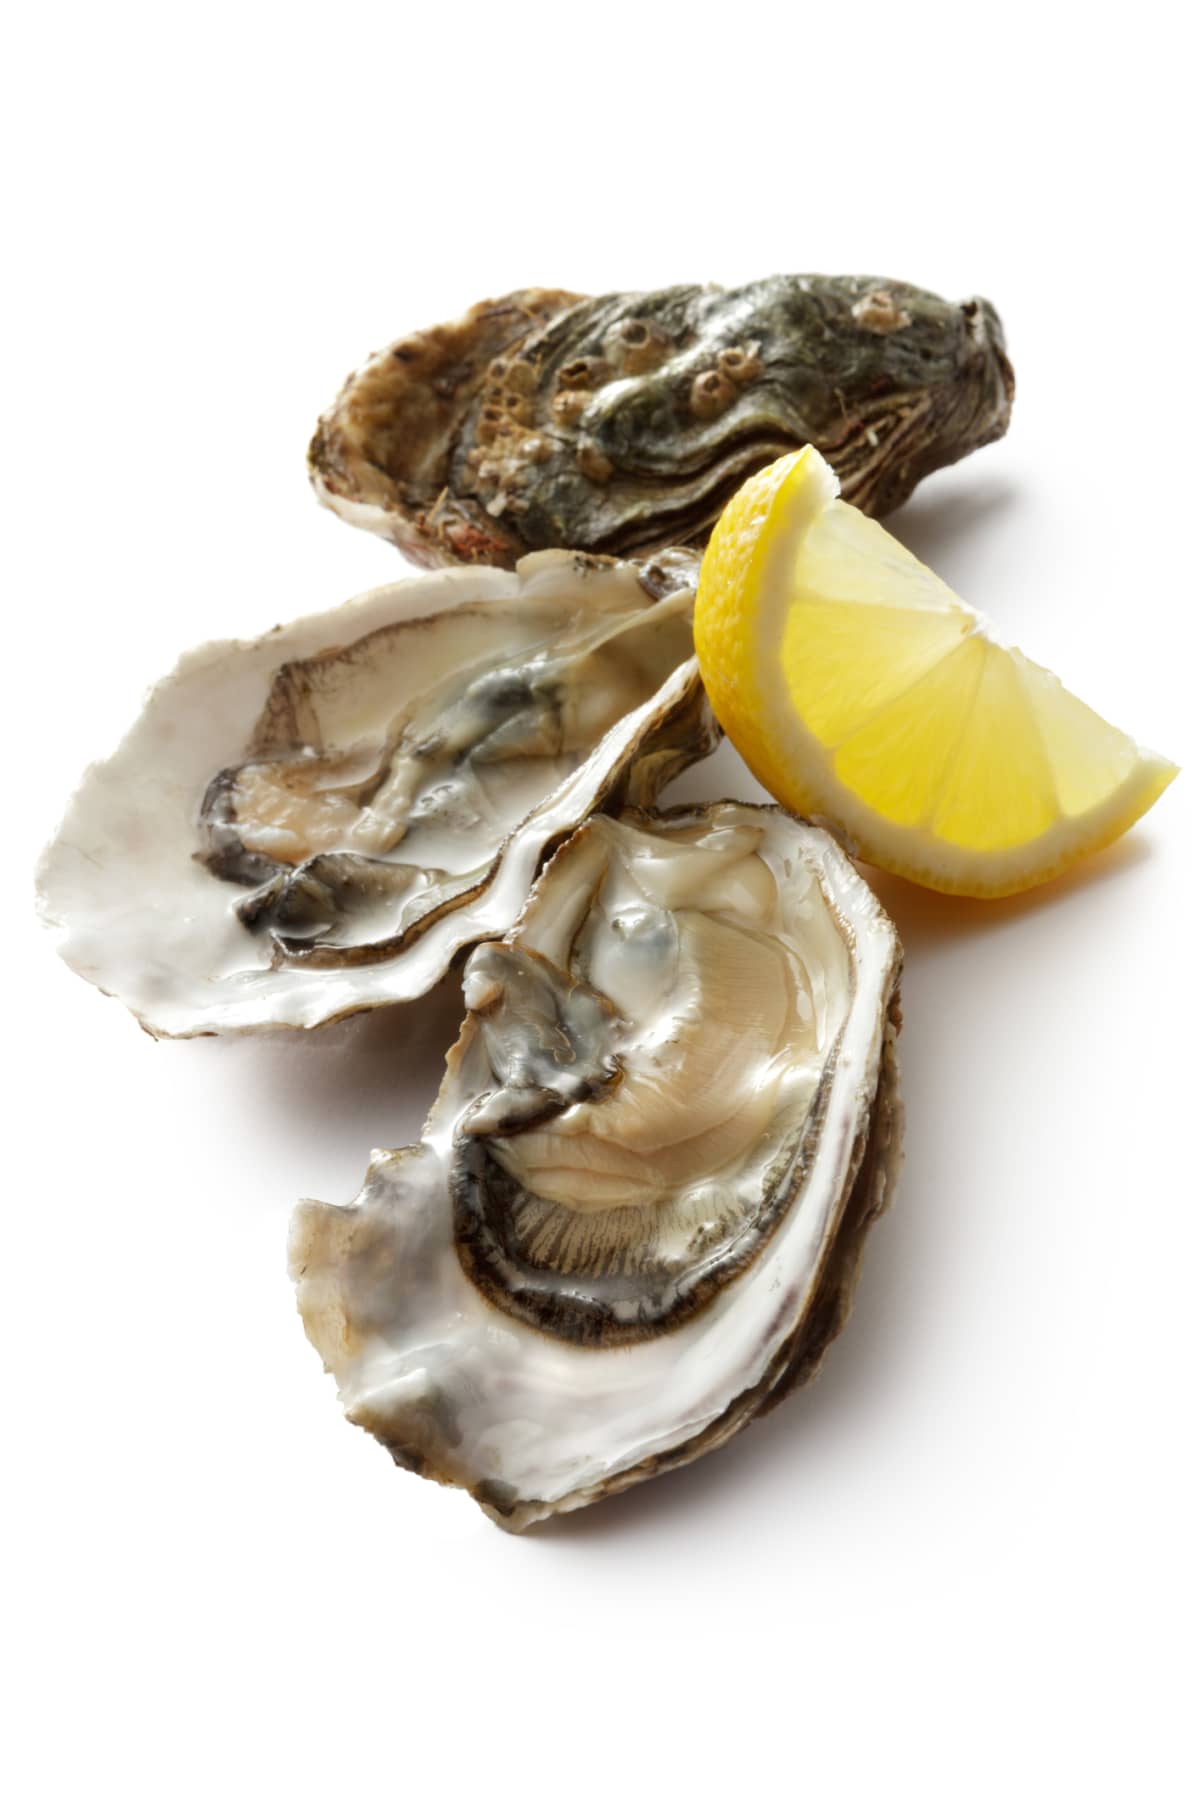 Three oysters with lemon slice garnish